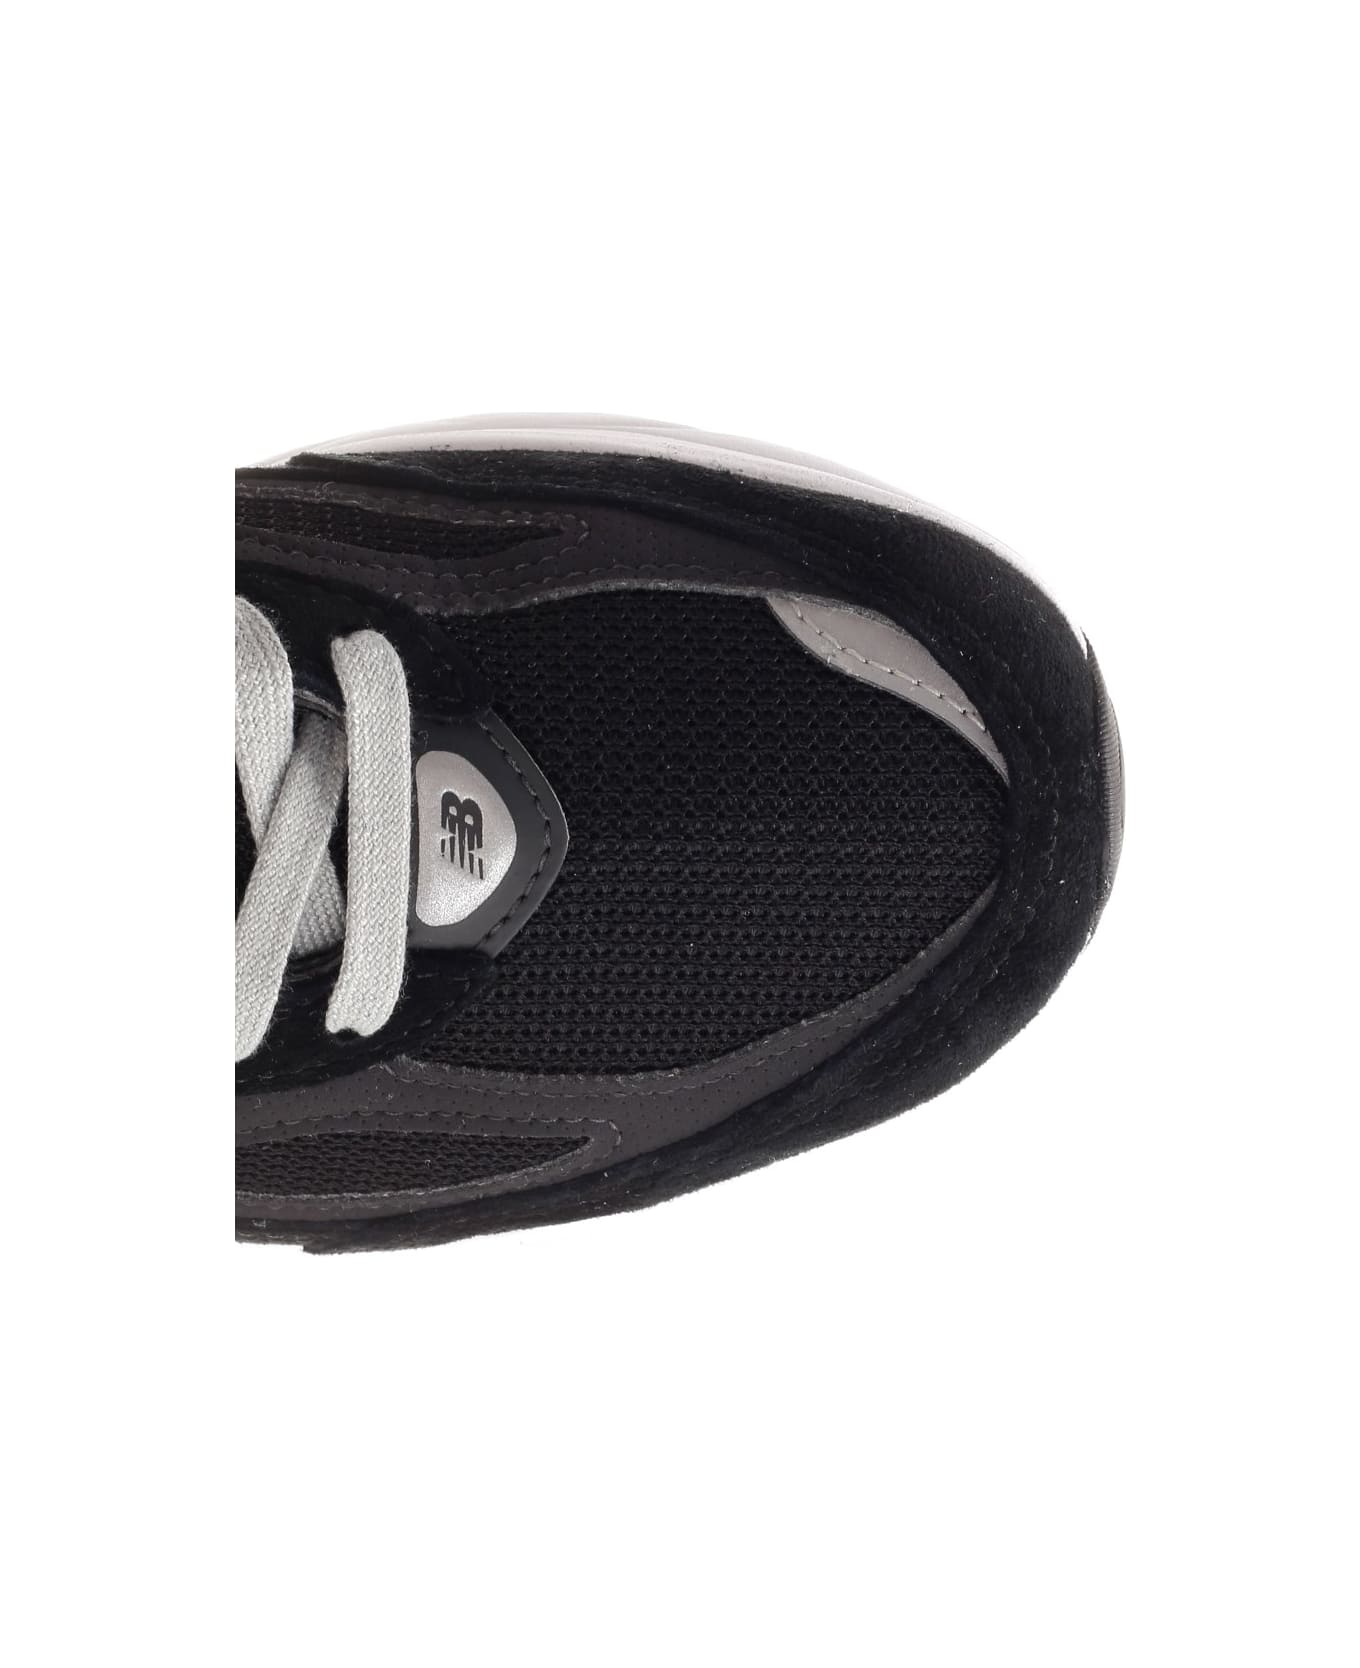 New Balance Black '990' Sneakers - Black スニーカー